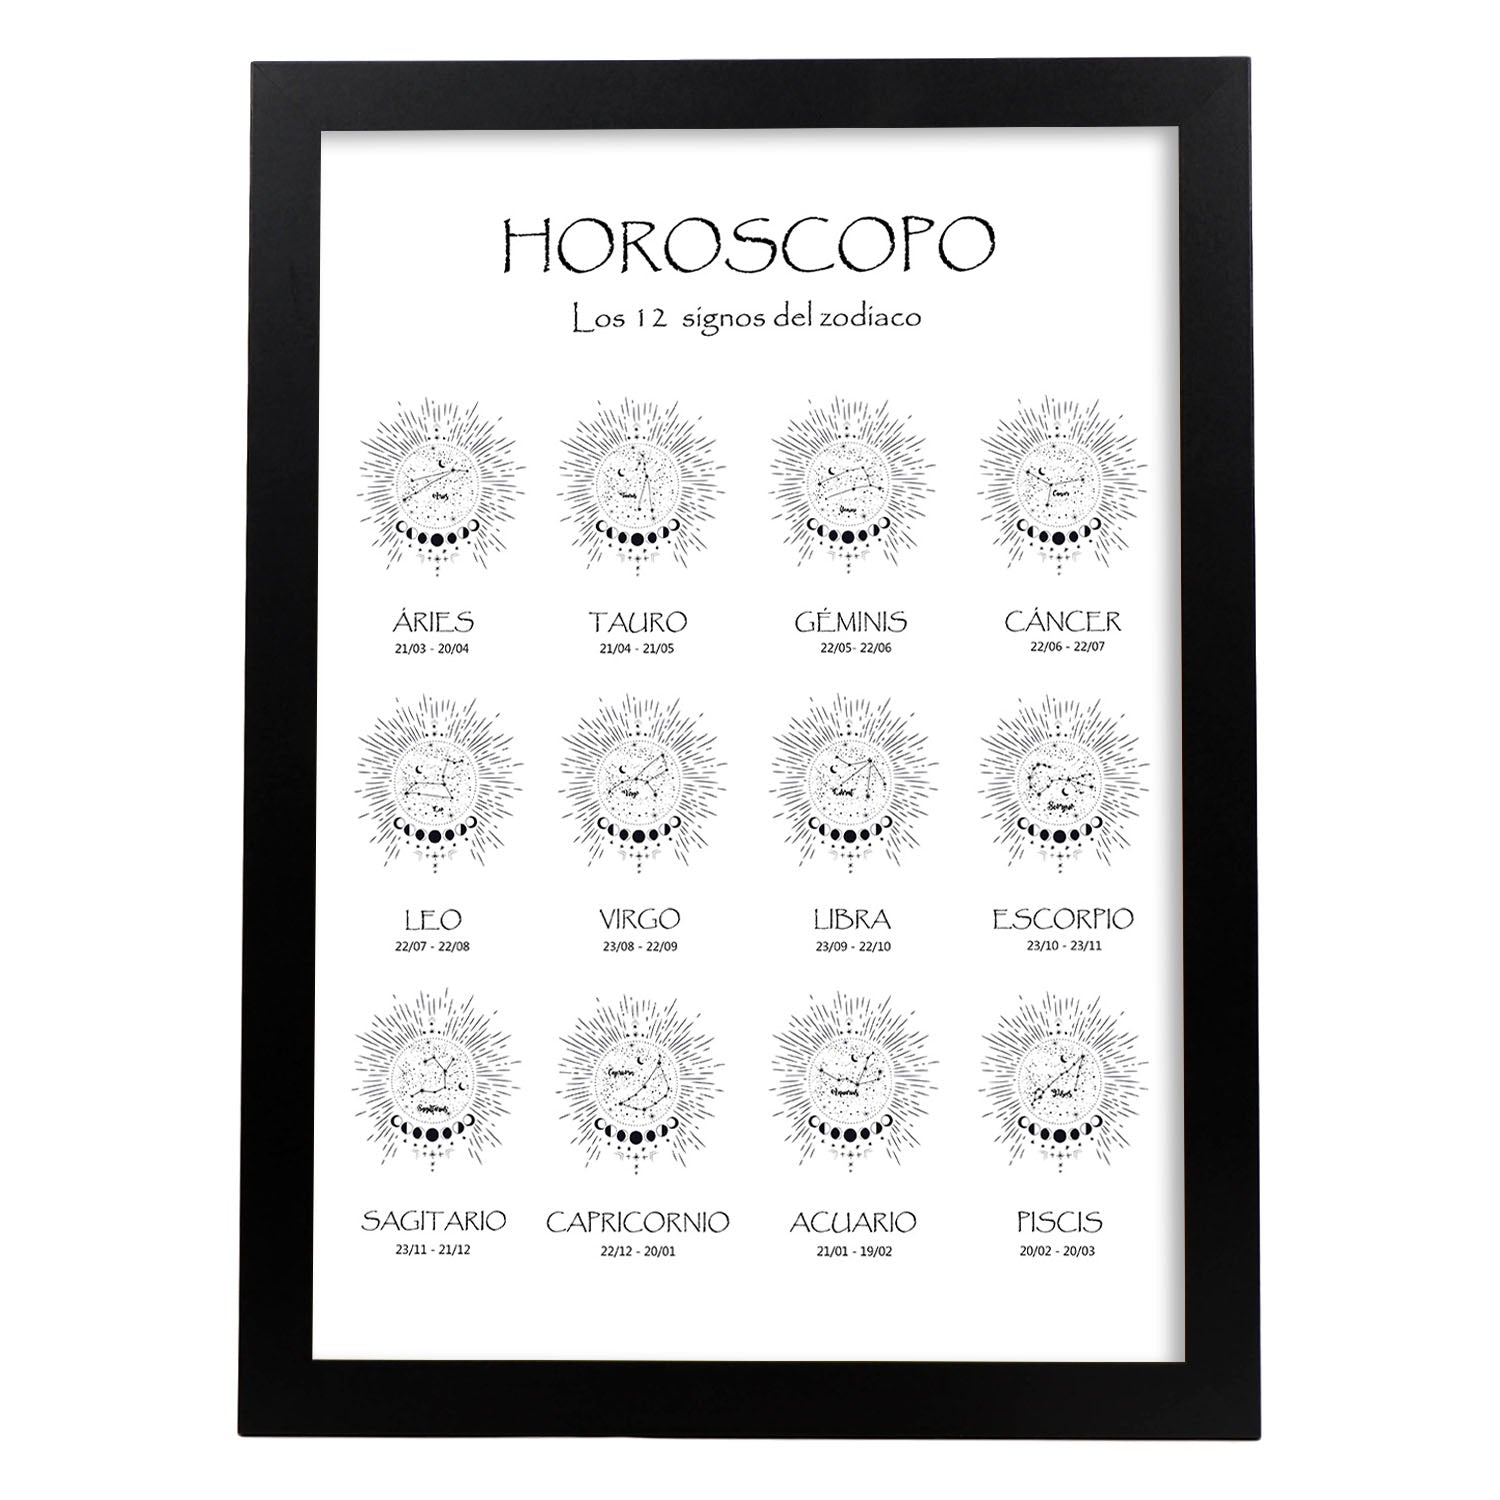 Poster de Horoscopos en español. Lamina de horoscopos y astrología.-Artwork-Nacnic-A4-Marco Negro-Nacnic Estudio SL